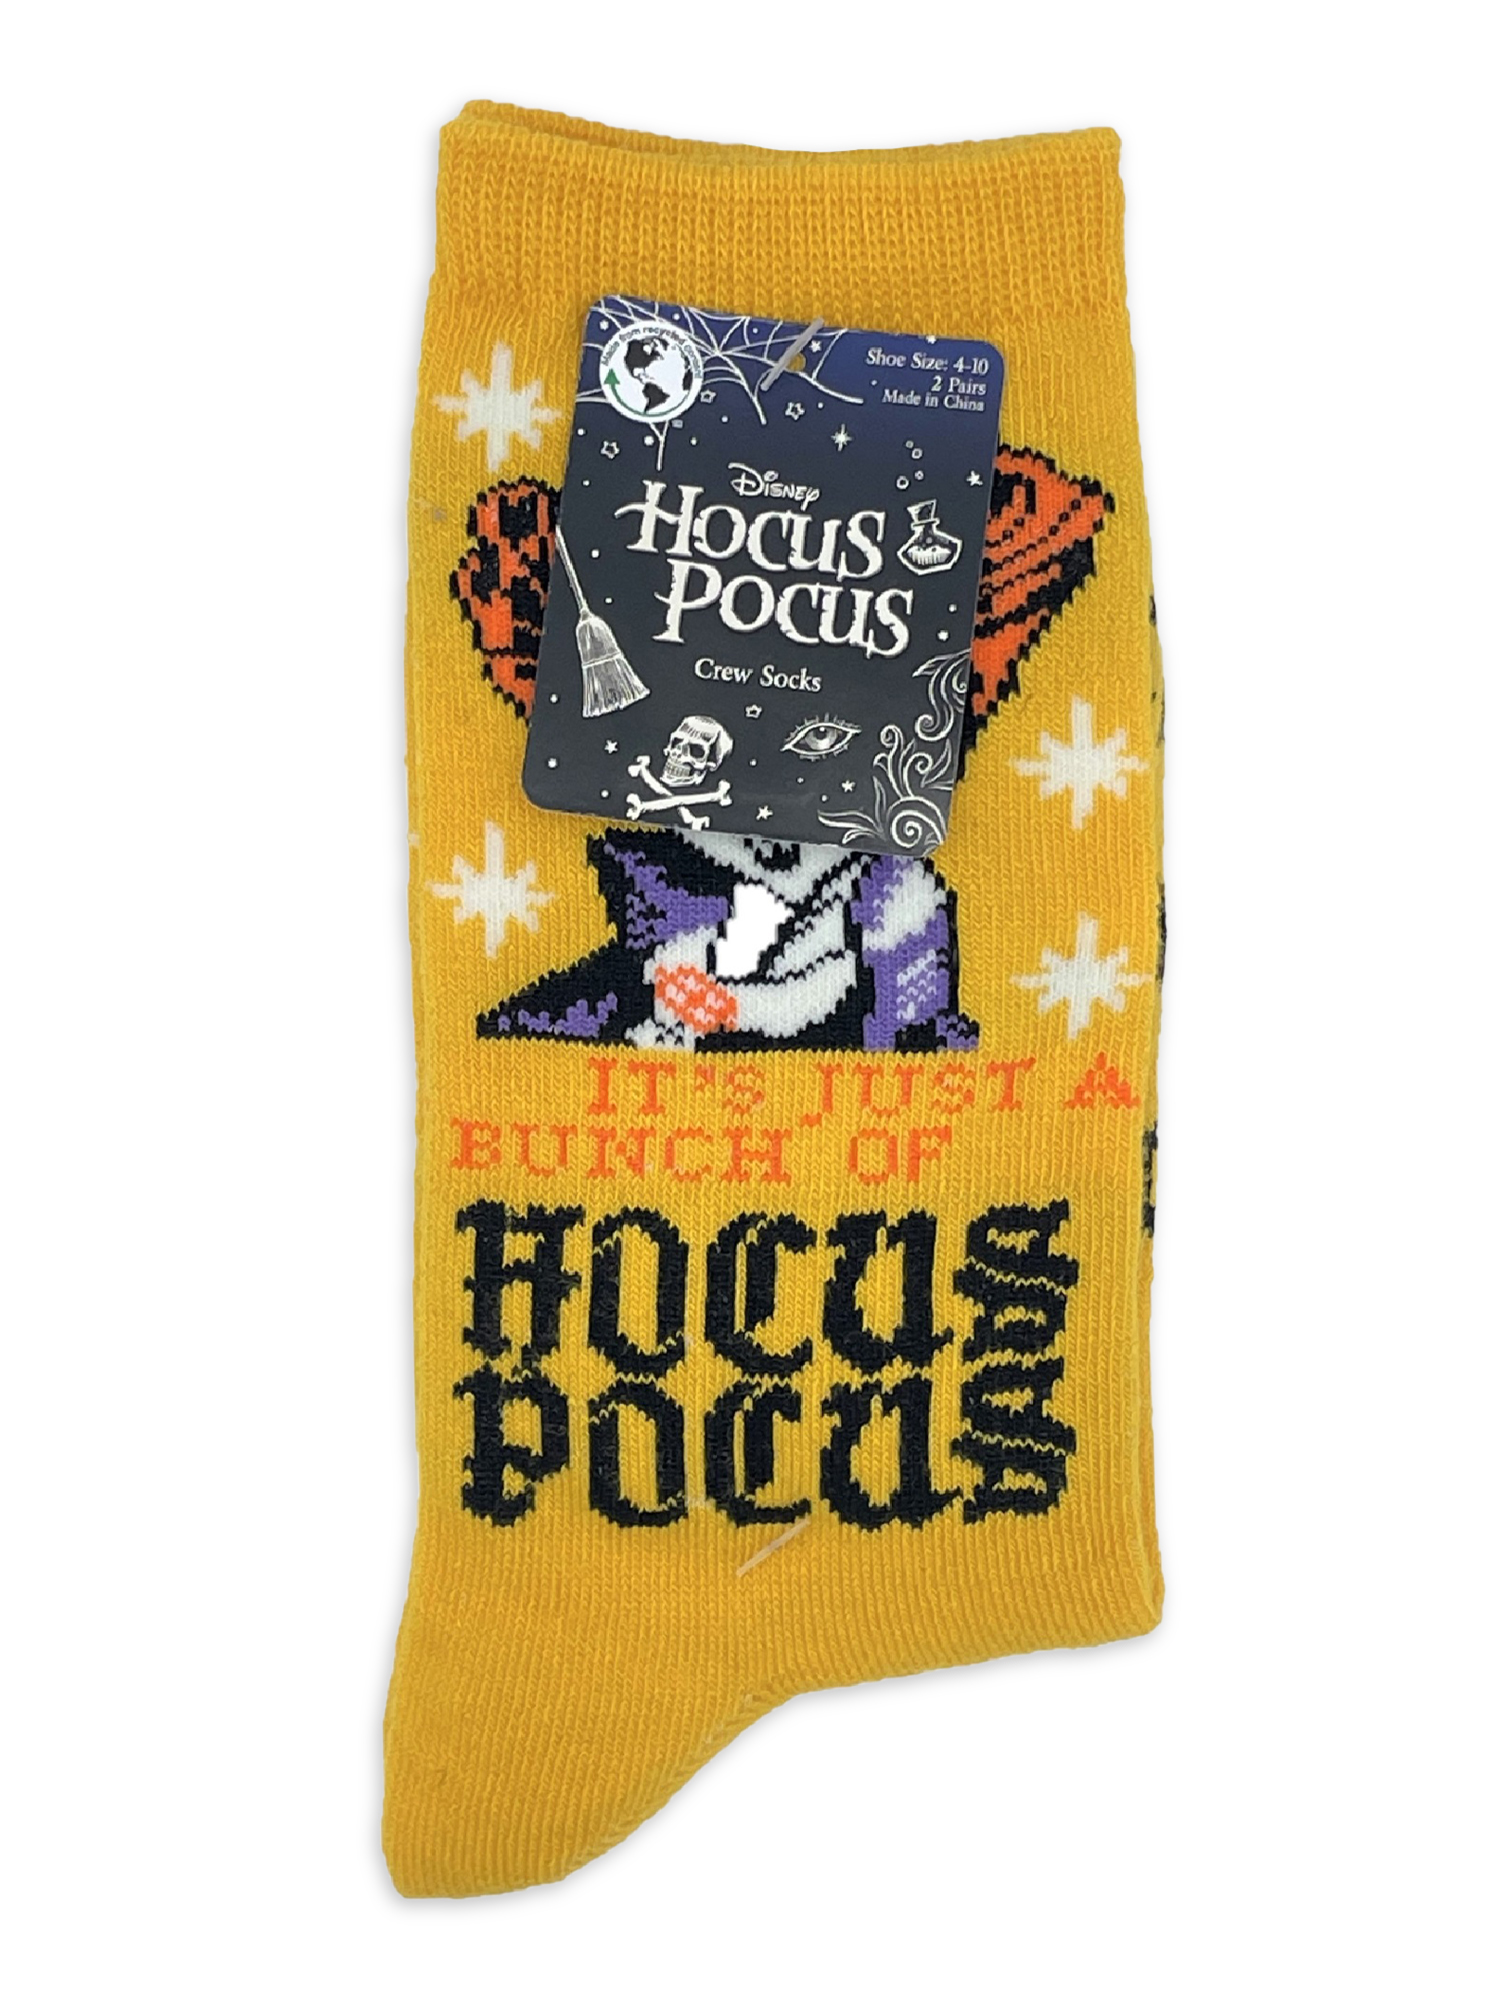 Hocus Pocus Women's Halloween Crew Socks, 2-Pack, Size 4-10 - image 2 of 7